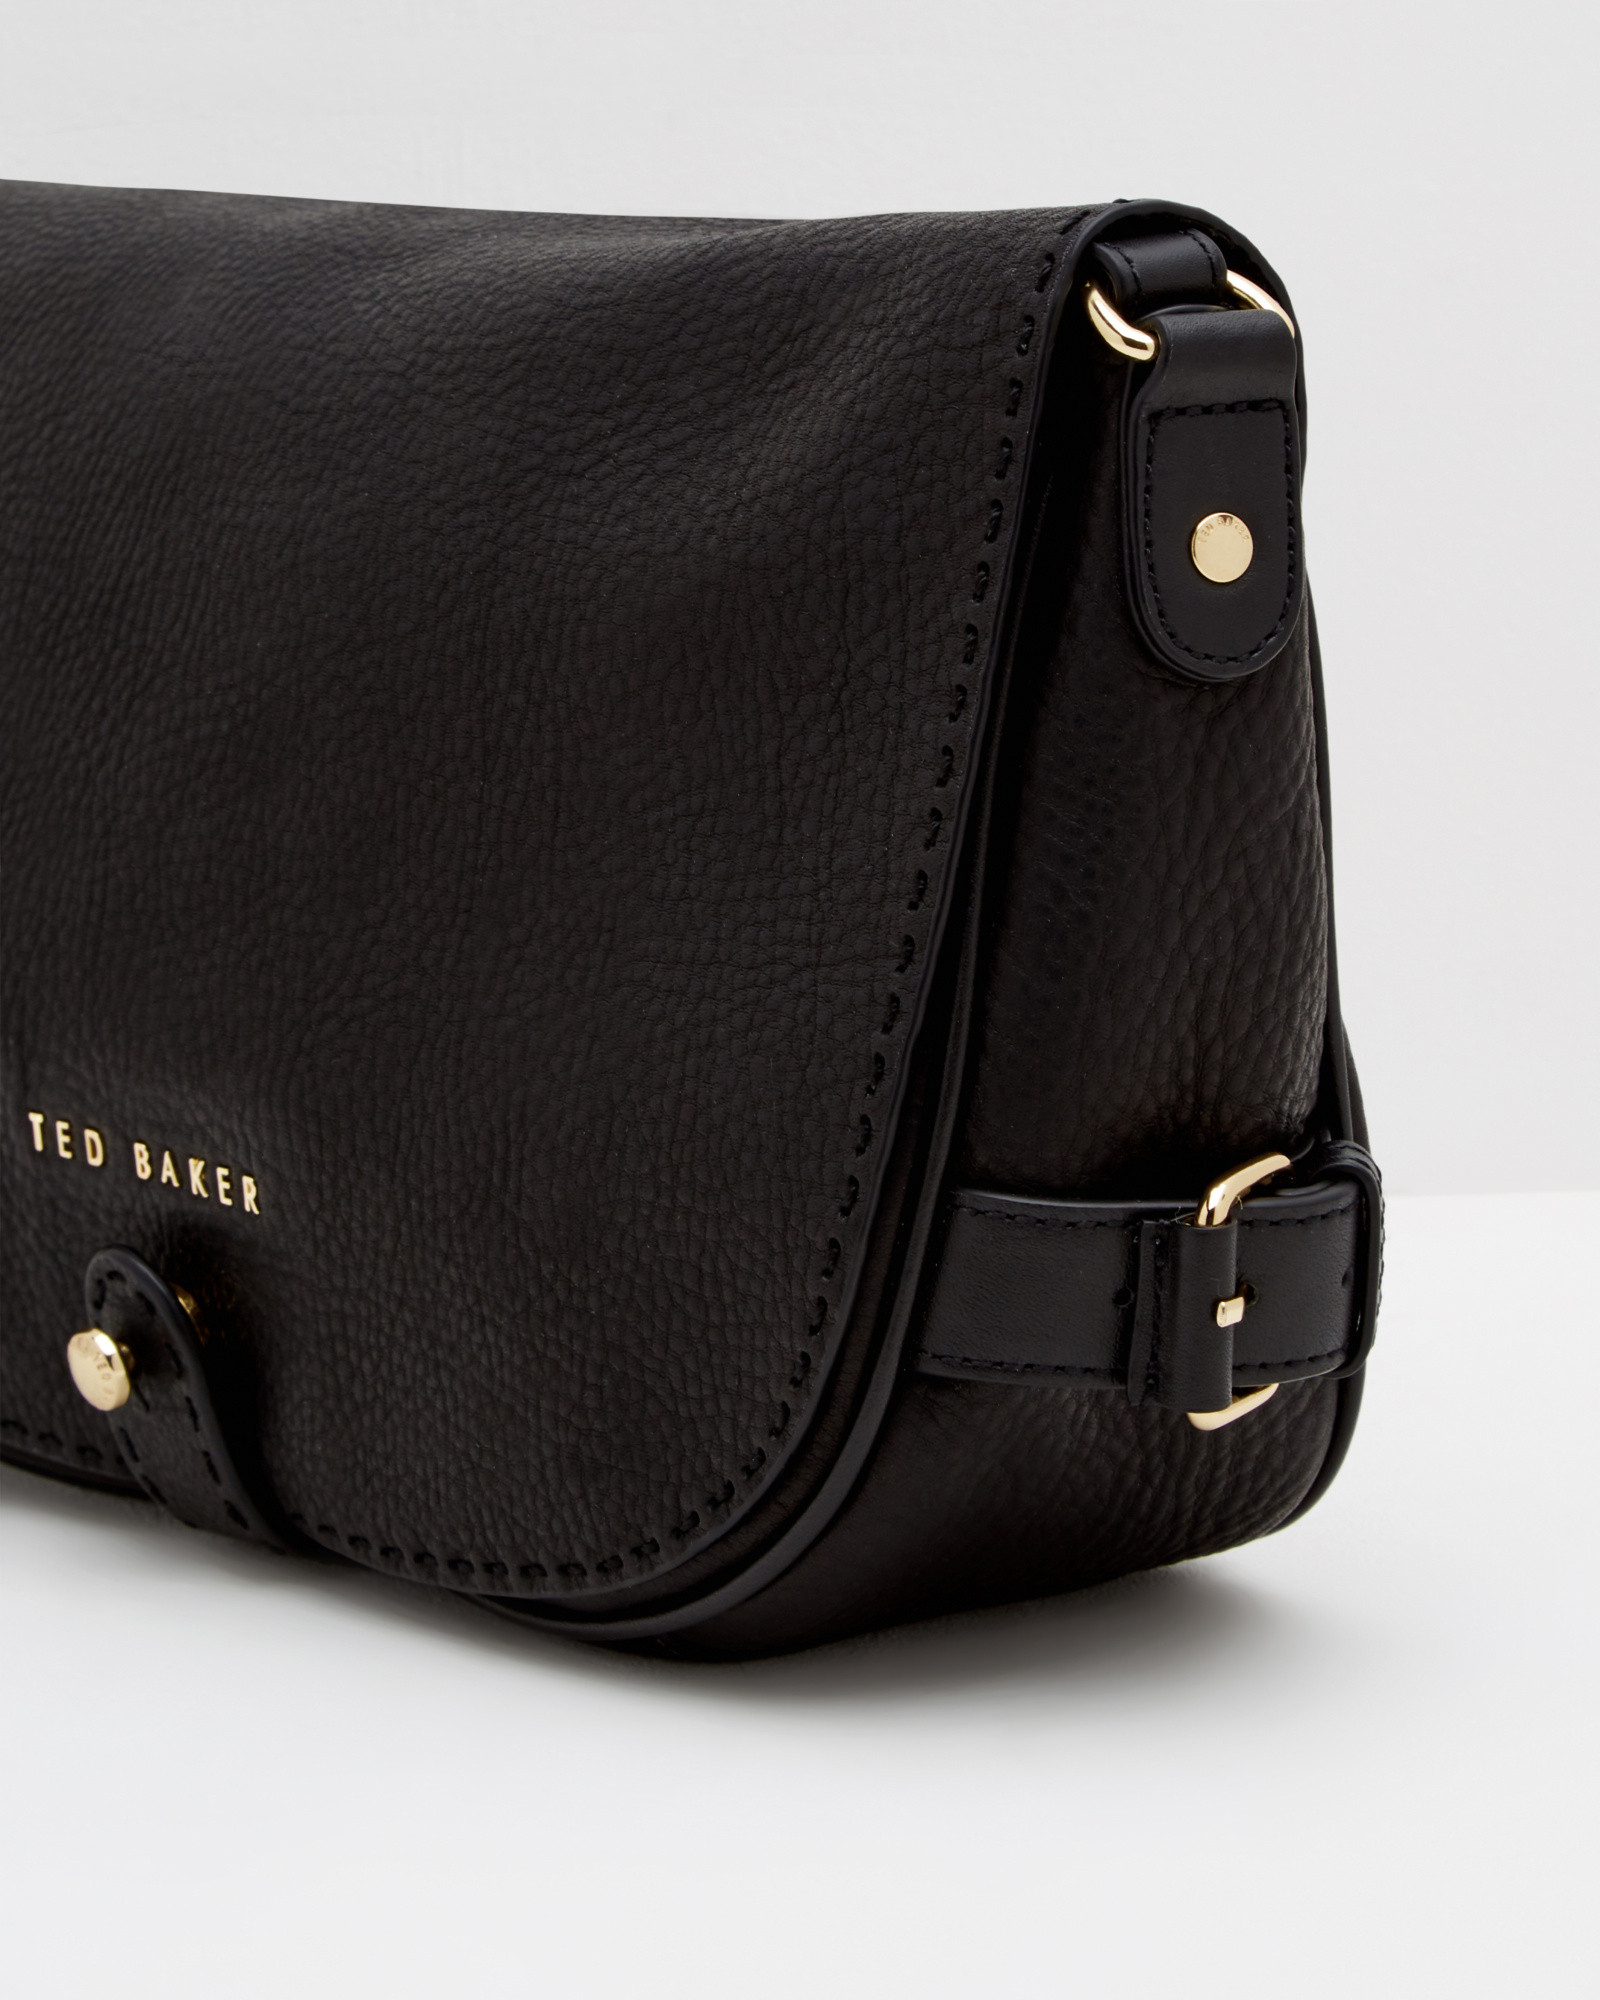 Ted baker Leather Crossbody Saddle Bag in Black | Lyst